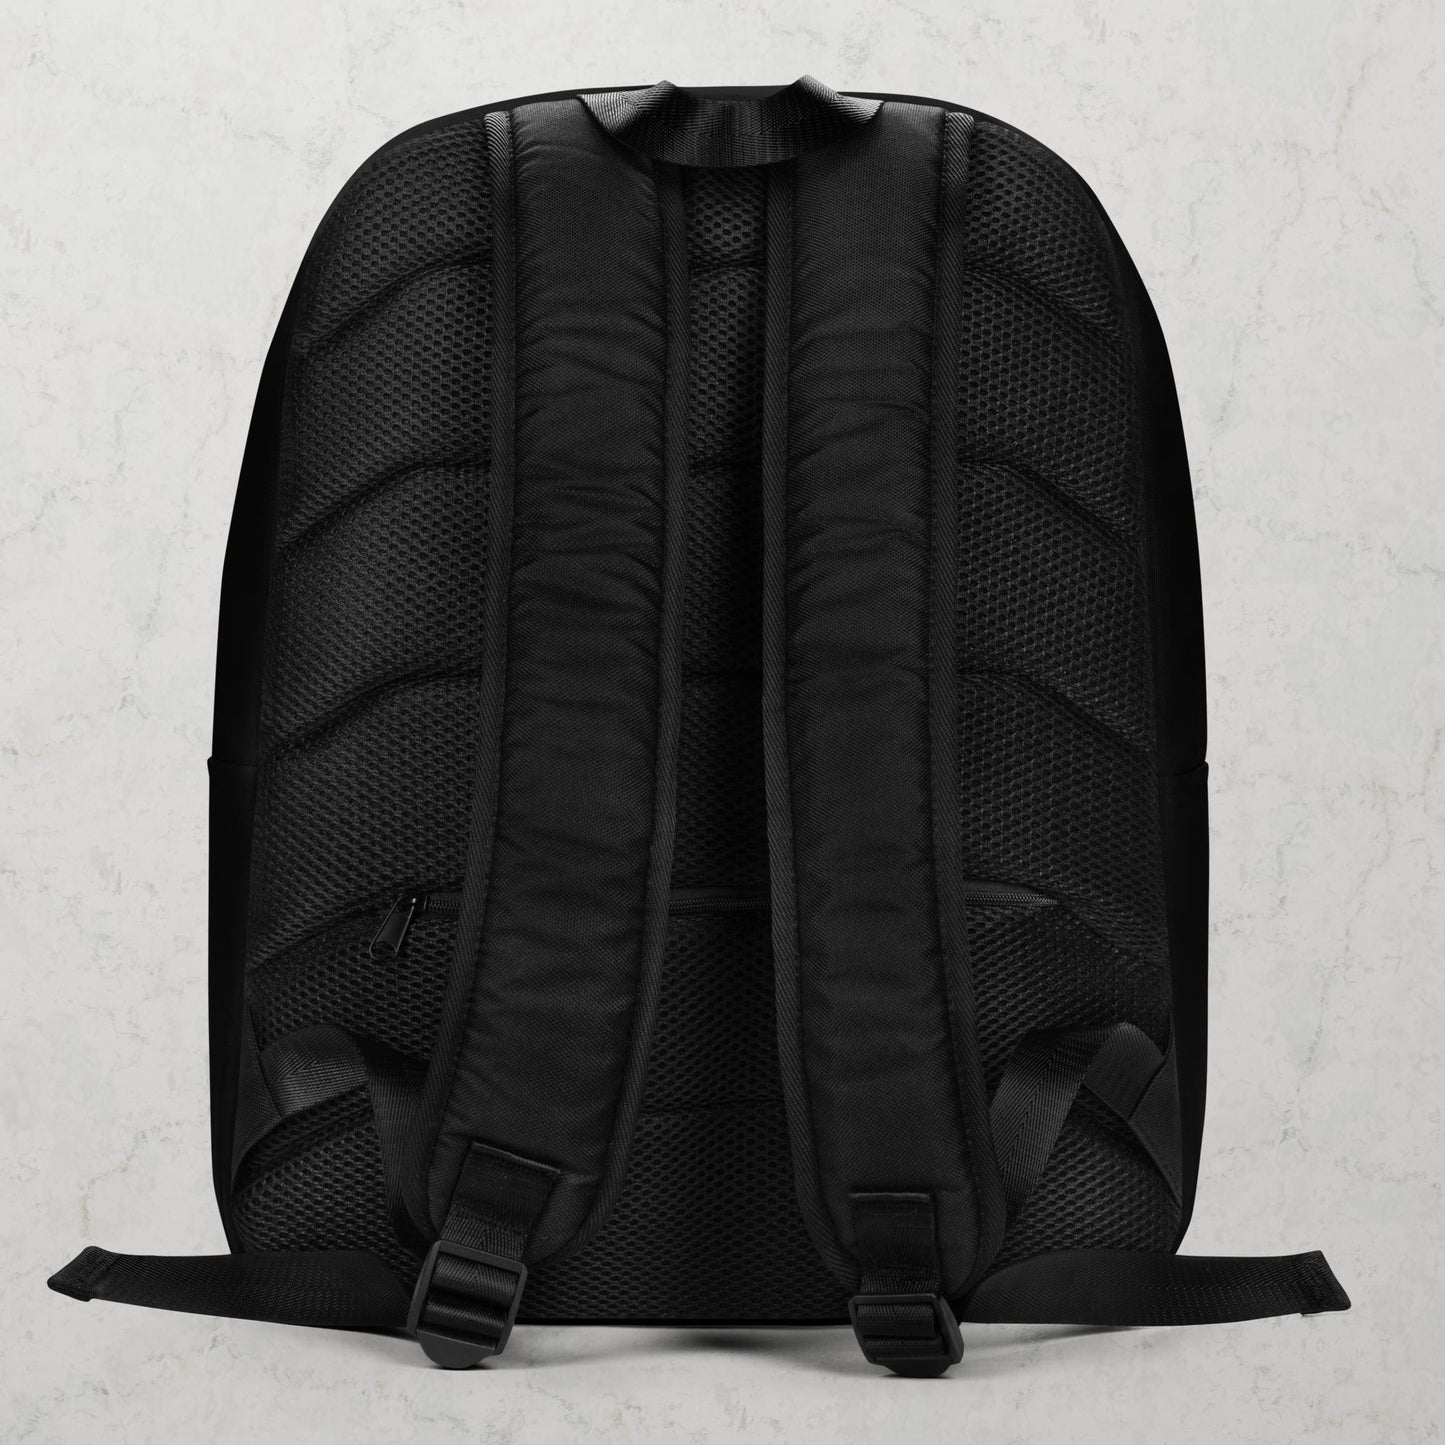 J.A Black Backpack